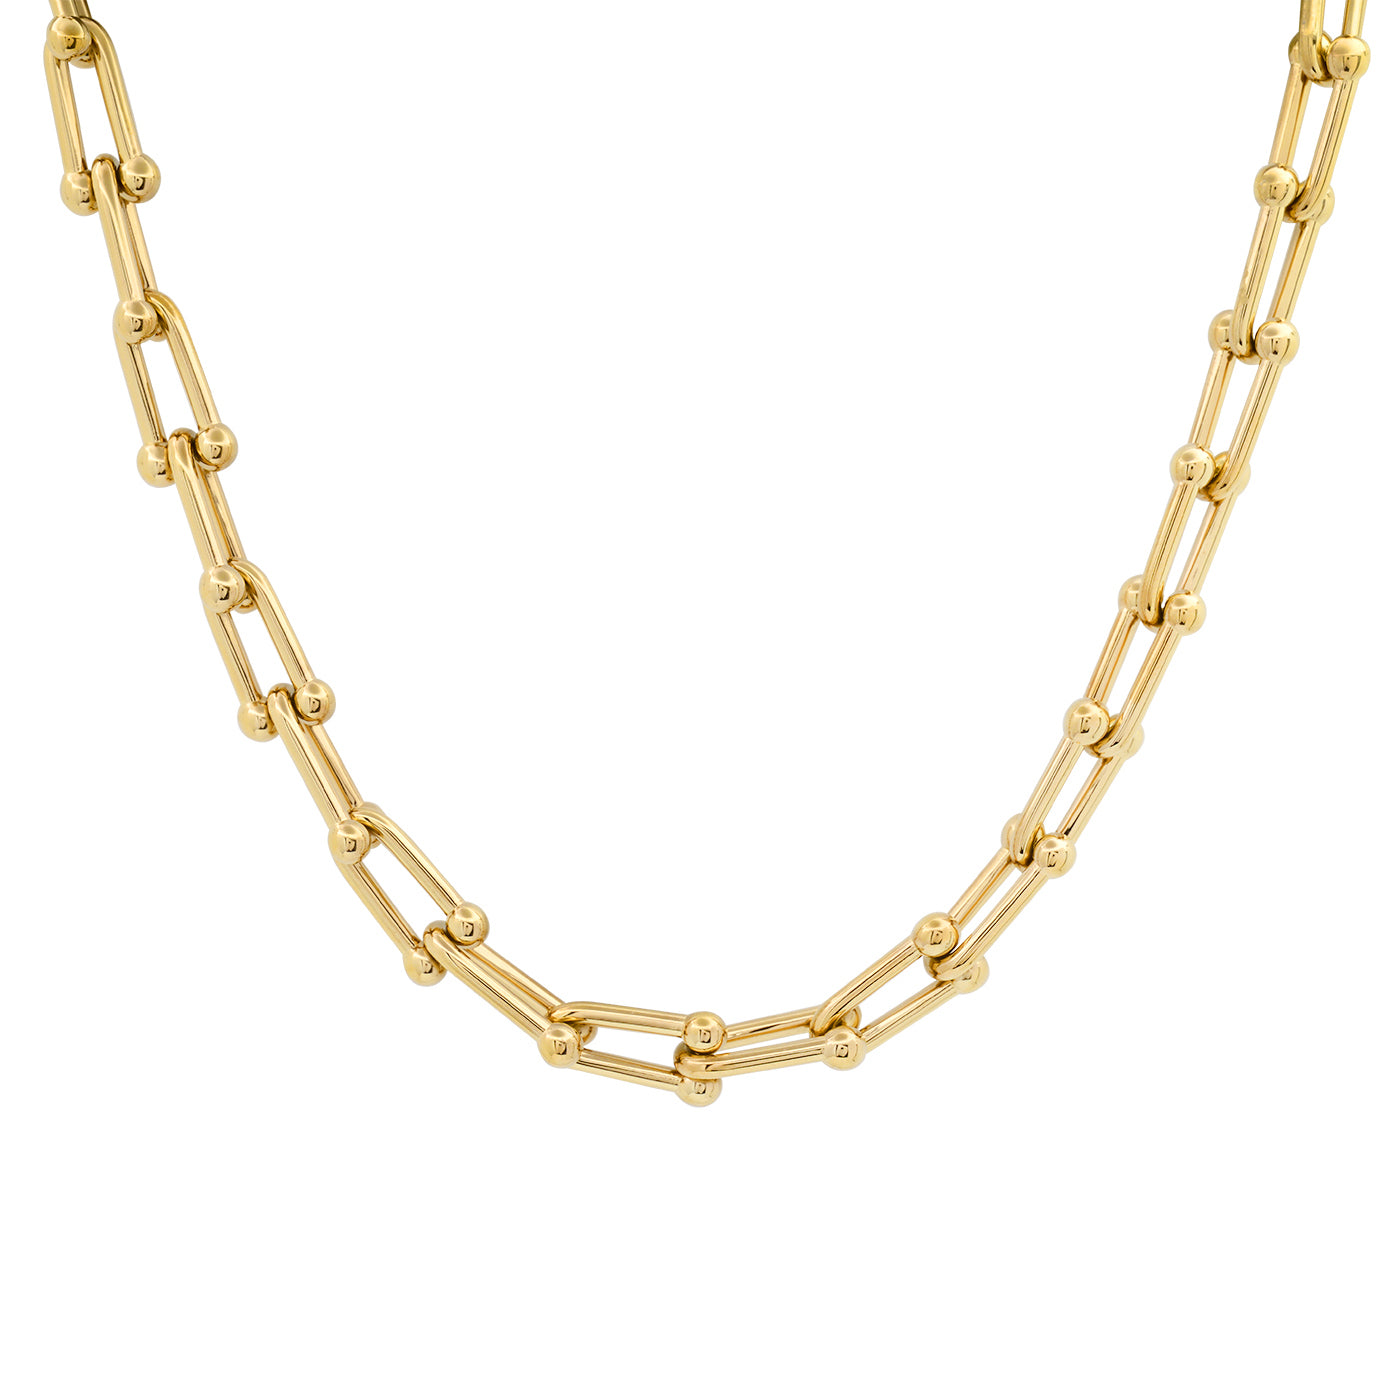 TAI Horseshoe chain necklace